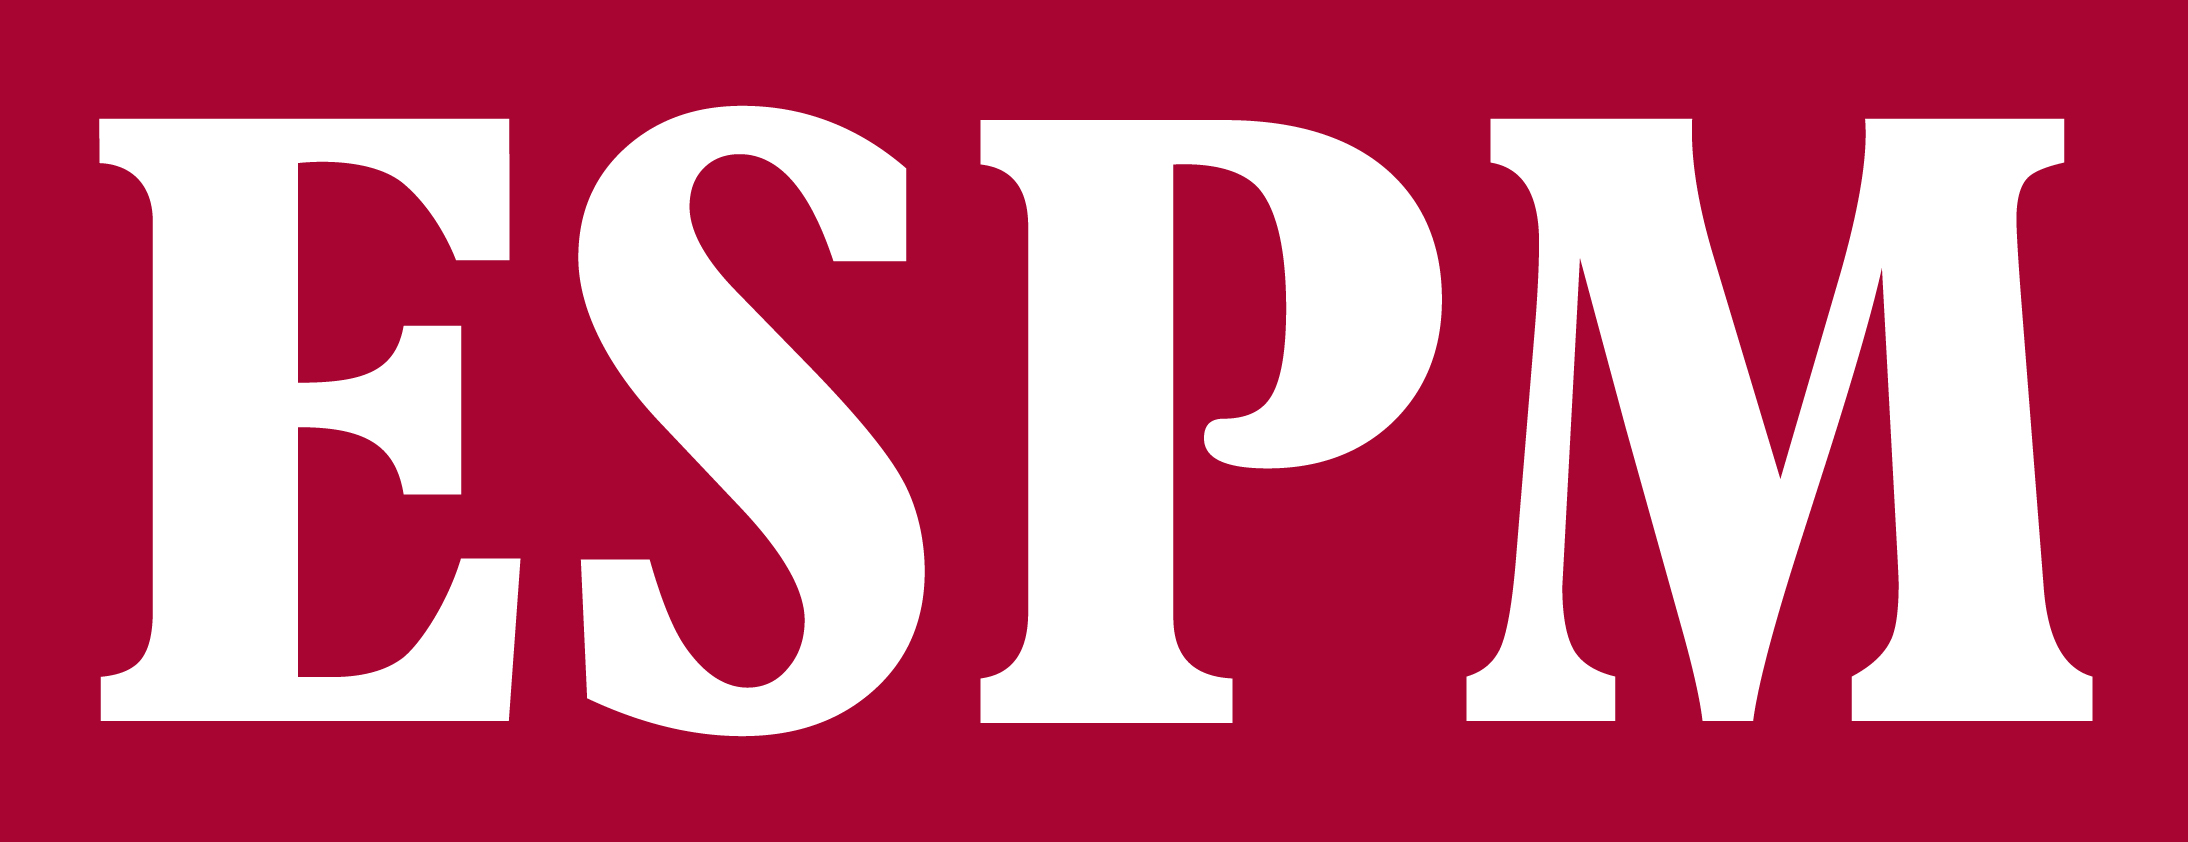 espm-logo.jpg